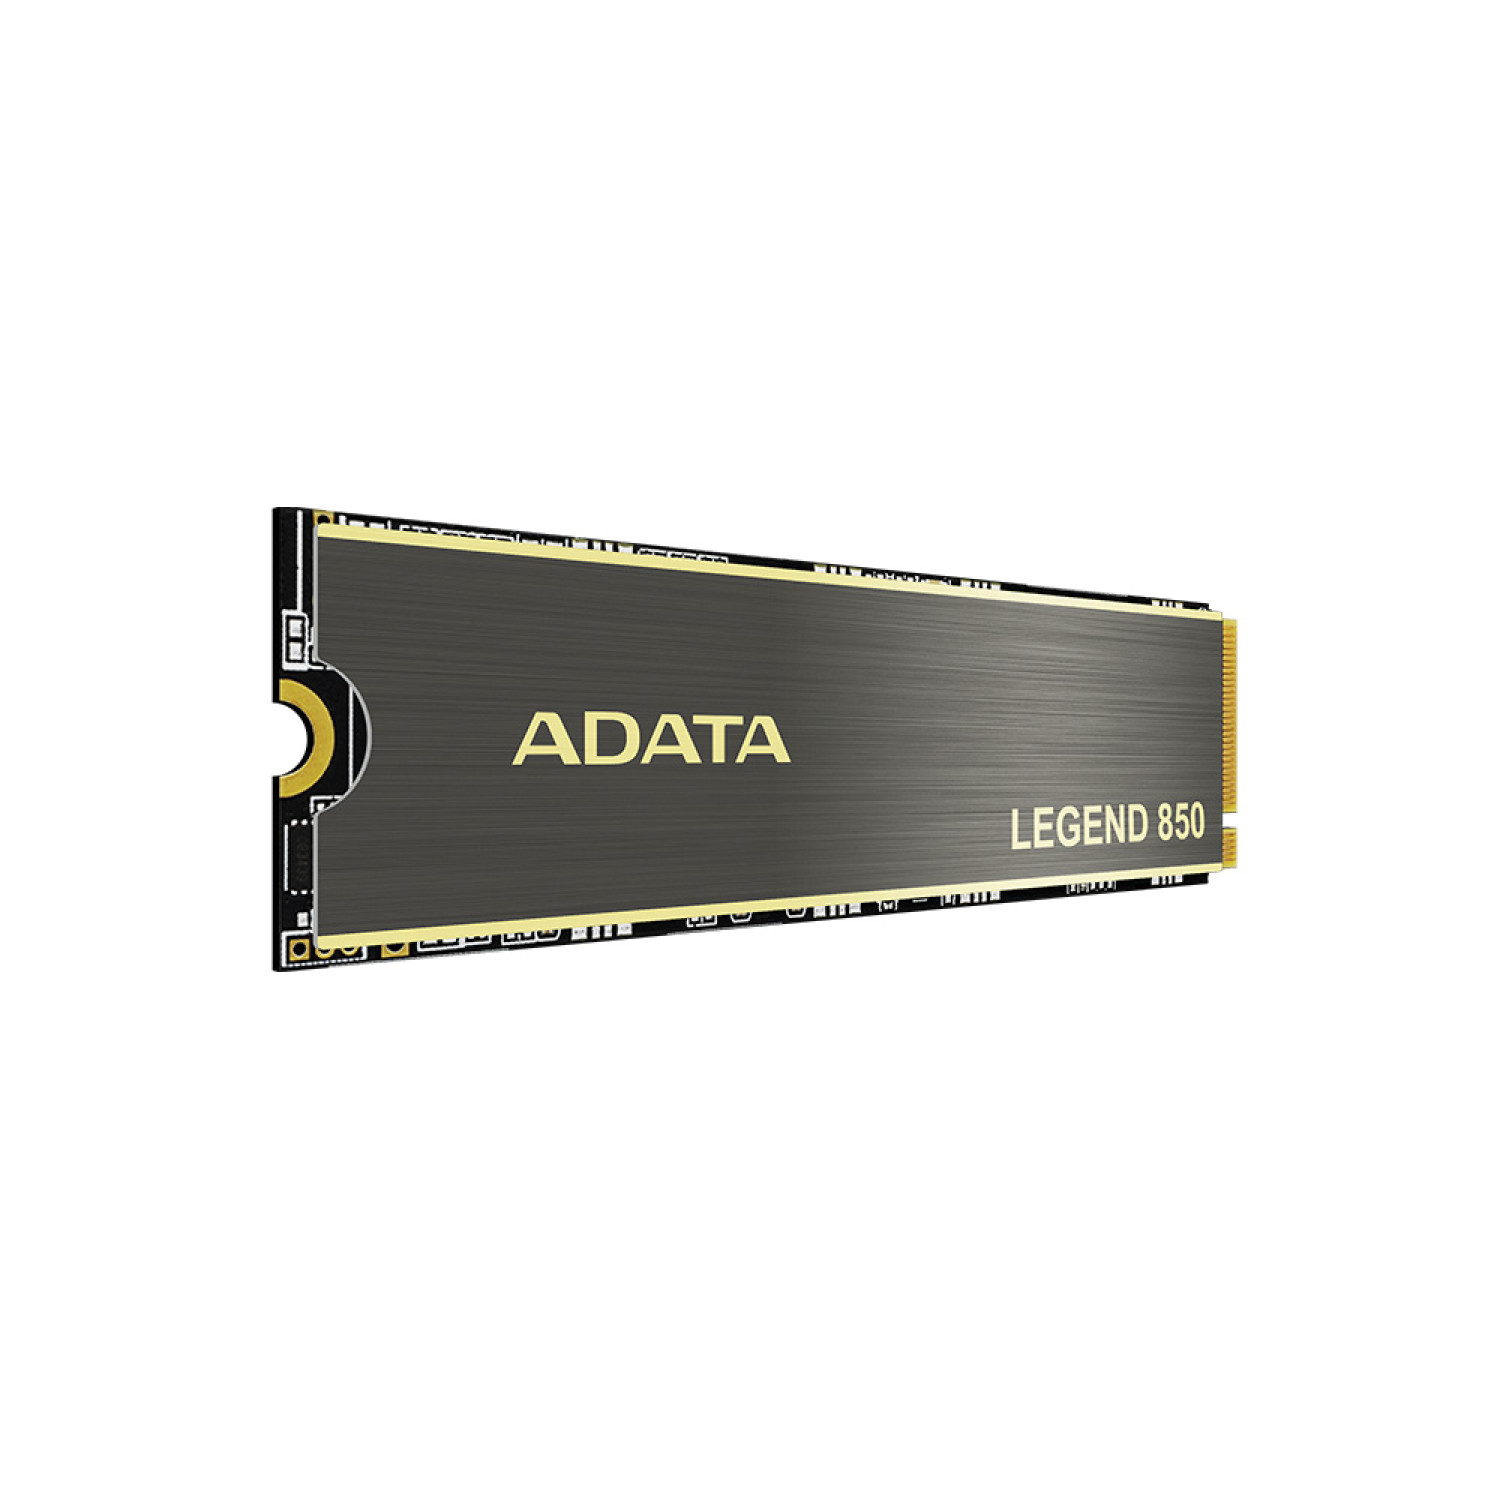 حافظه اس اس دی ADATA Legend 850 1TB - for PS5-3